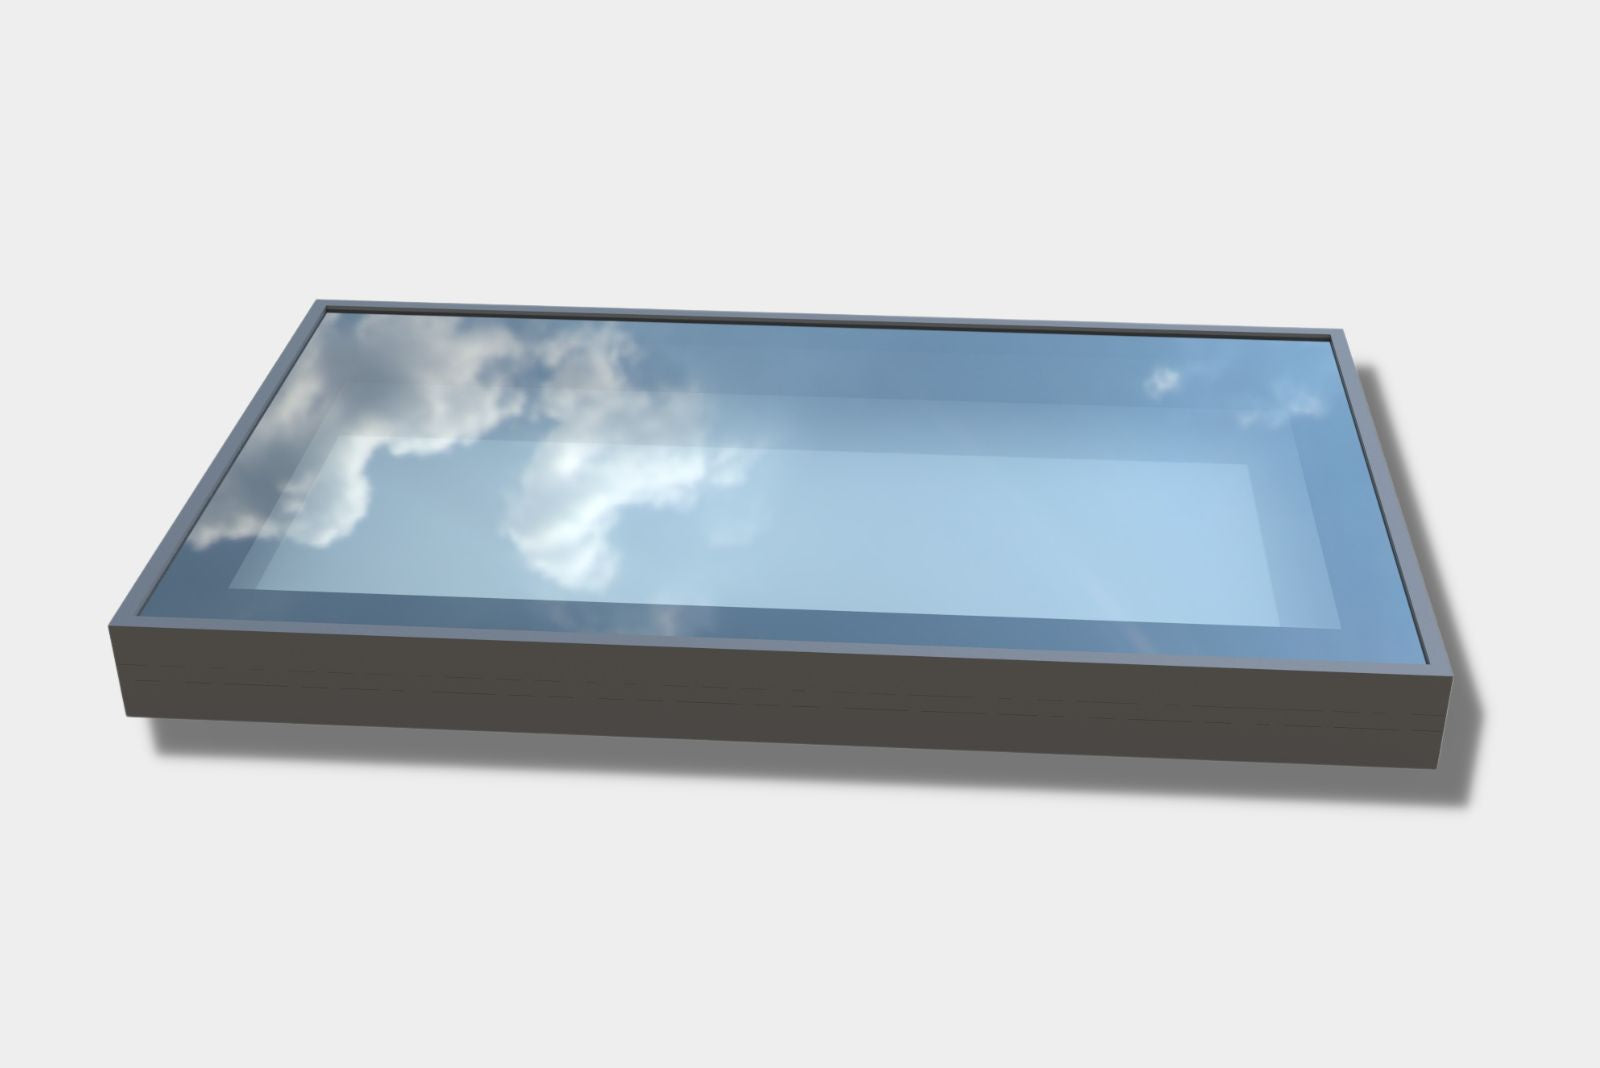 Framed Skylight 800 x 1800 mm – Double glazed